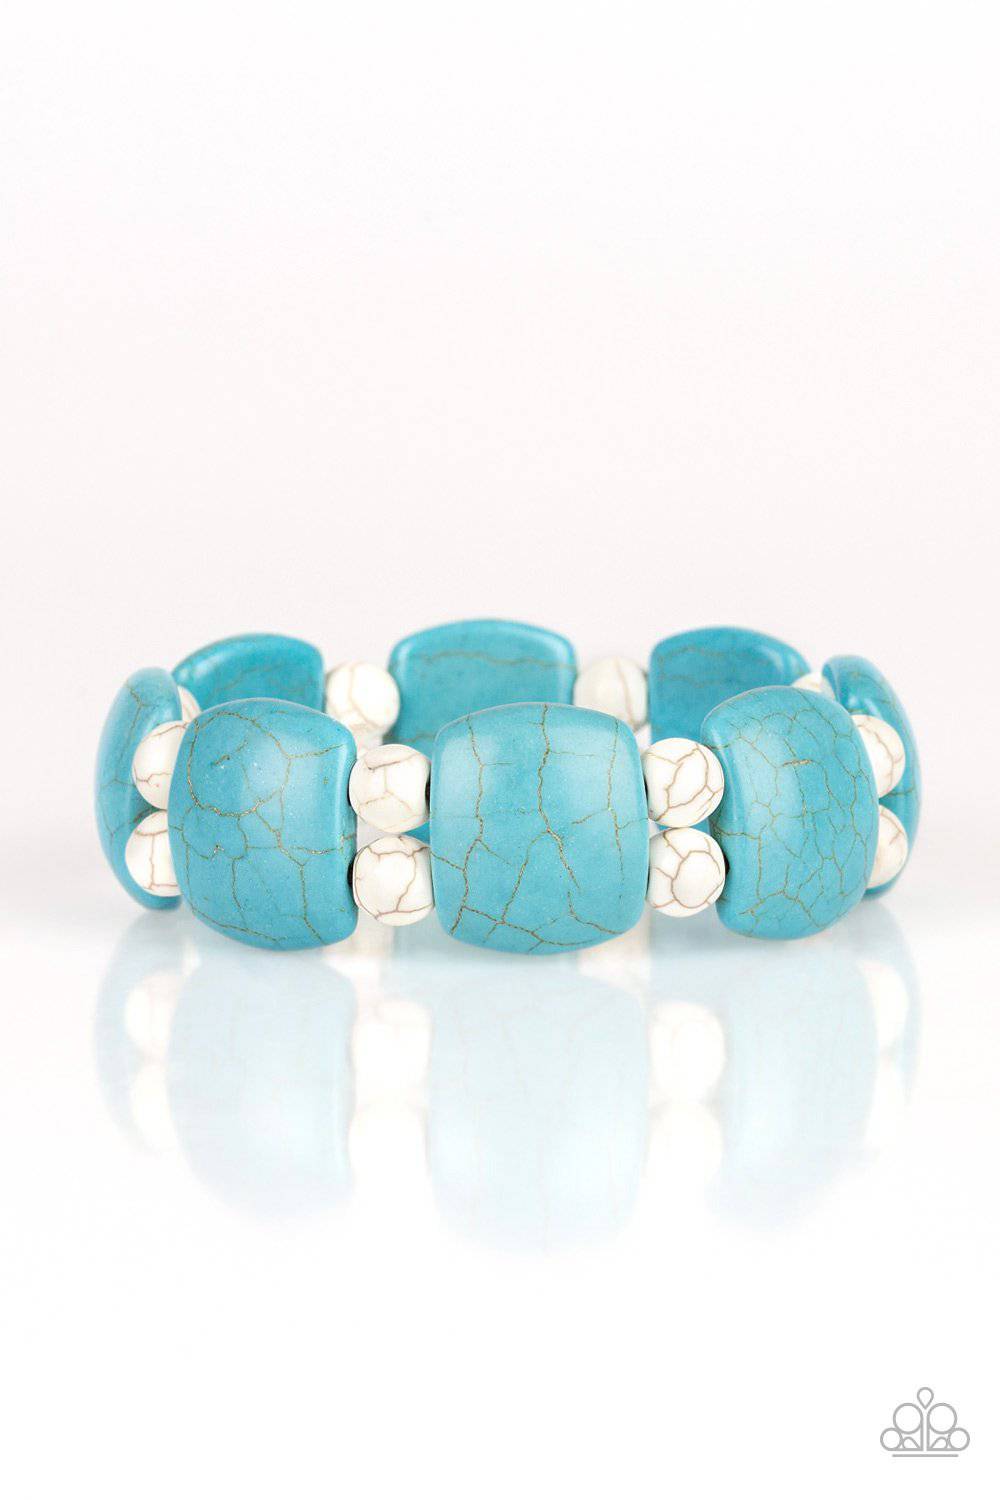 Dont Be So NOMADIC! - Turquoise & White Stretchy Bracelet - Paparazzi Accessories - GlaMarous Titi Jewels